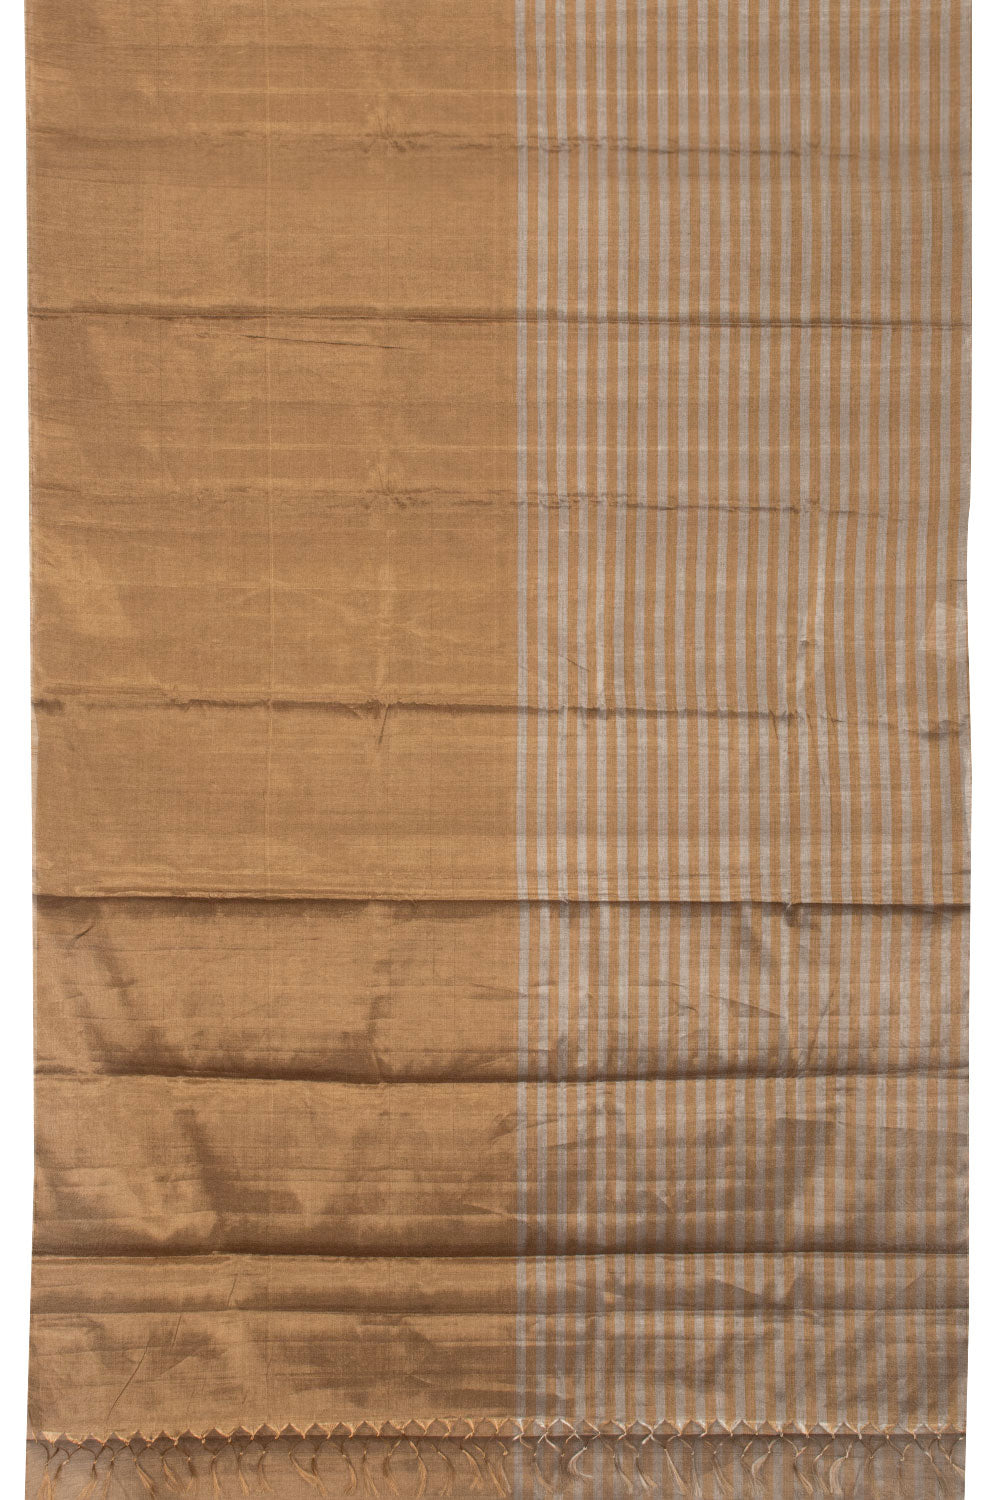 Brown Handwoven Chanderi Silk Cotton Saree - Avishya